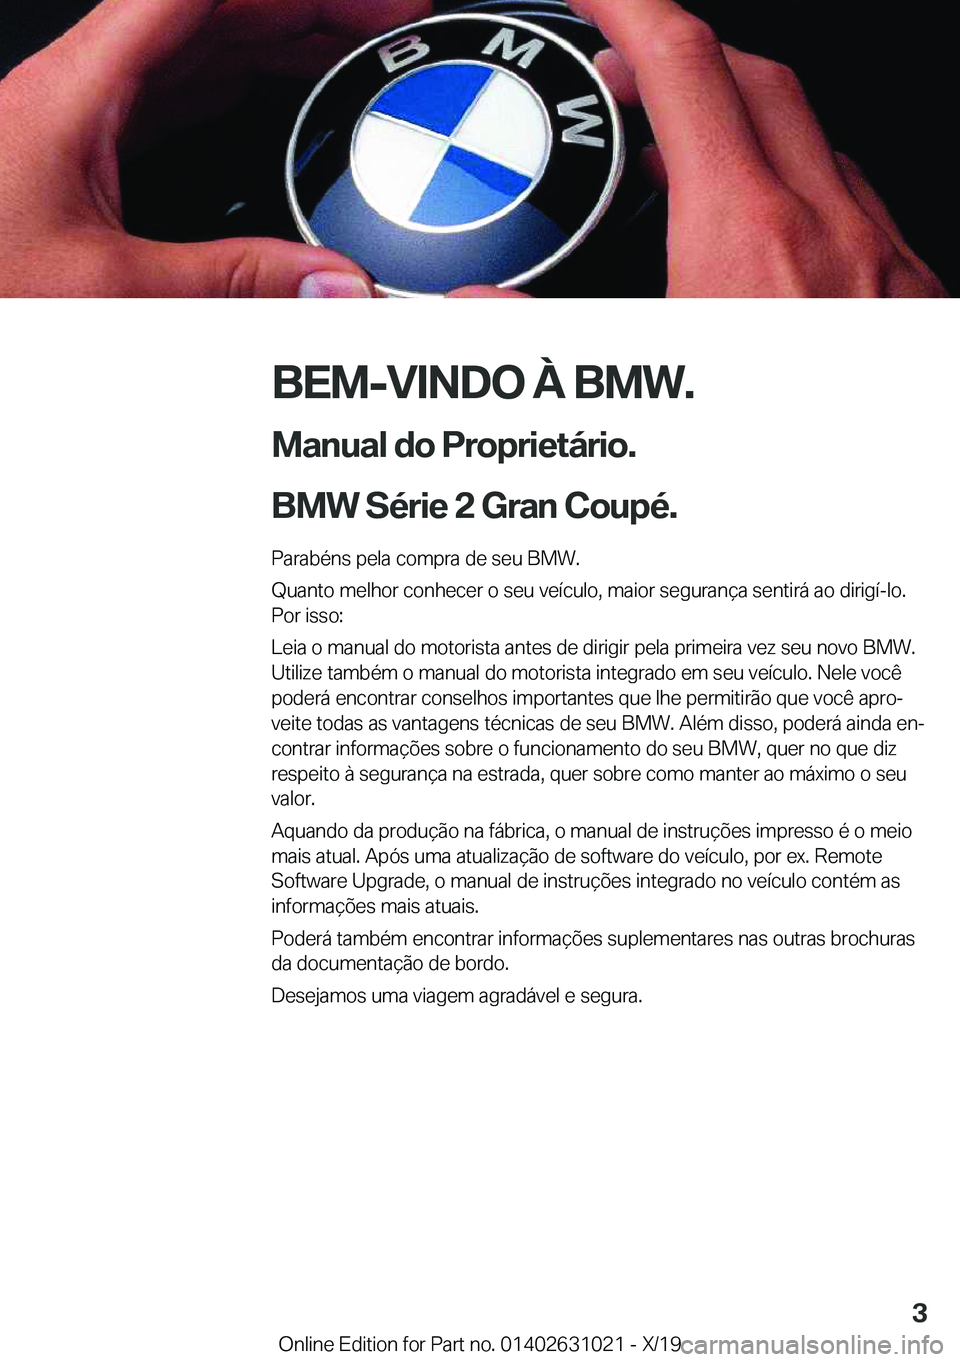 BMW 2 SERIES GRAN COUPE 2020  Manual do condutor (in Portuguese) �B�E�M�-�V�I�N�D�O��À��B�M�W�.
�M�a�n�u�a�l��d�o��P�r�o�p�r�i�e�t�á�r�i�o�.
�B�M�W��S�é�r�i�e��2��G�r�a�n��C�o�u�p�é�. �P�a�r�a�b�é�n�s��p�e�l�a��c�o�m�p�r�a��d�e��s�e�u��B�M�W�.�Q�u